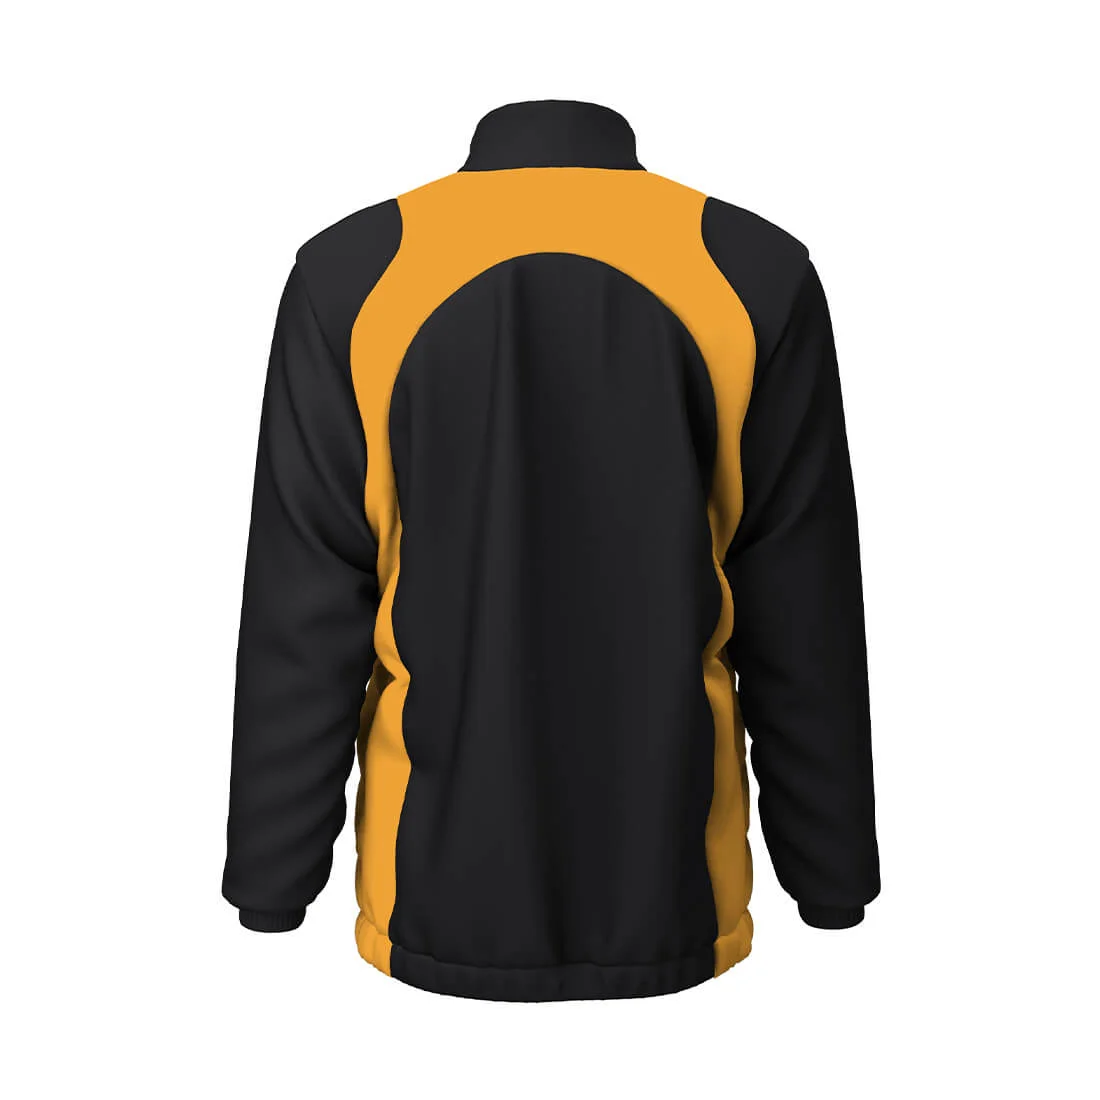 ZING Sportswear Showerproof Jacket | Training Kit and Teamwear - Black and Amber Back